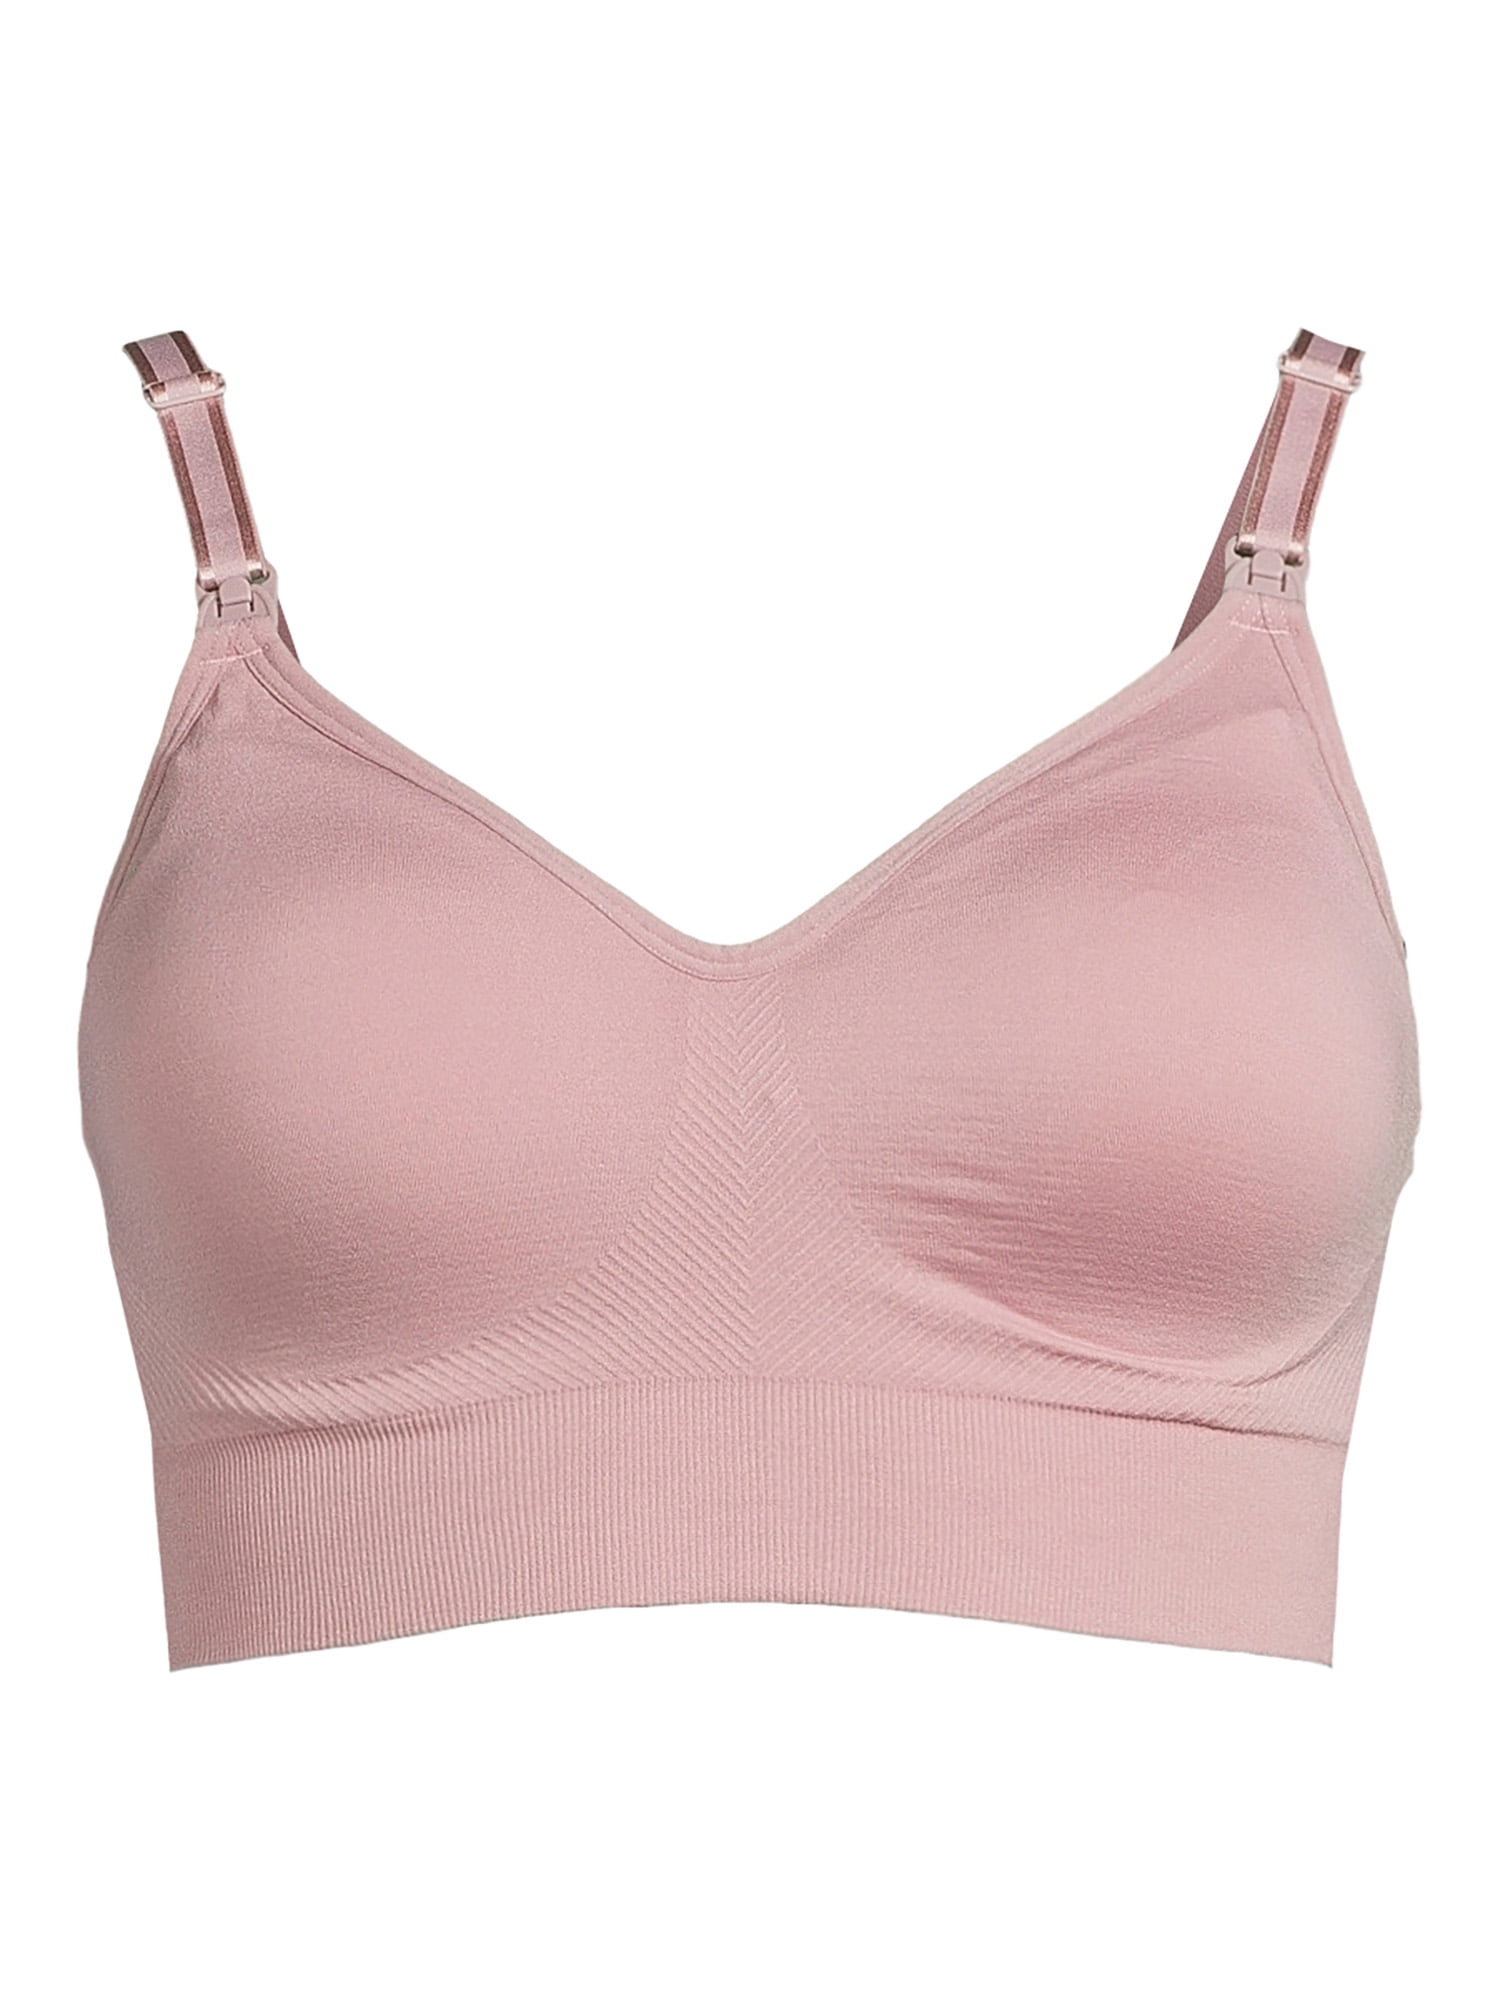 DeshkidTz - Nursing bra Price:15000 Size:l